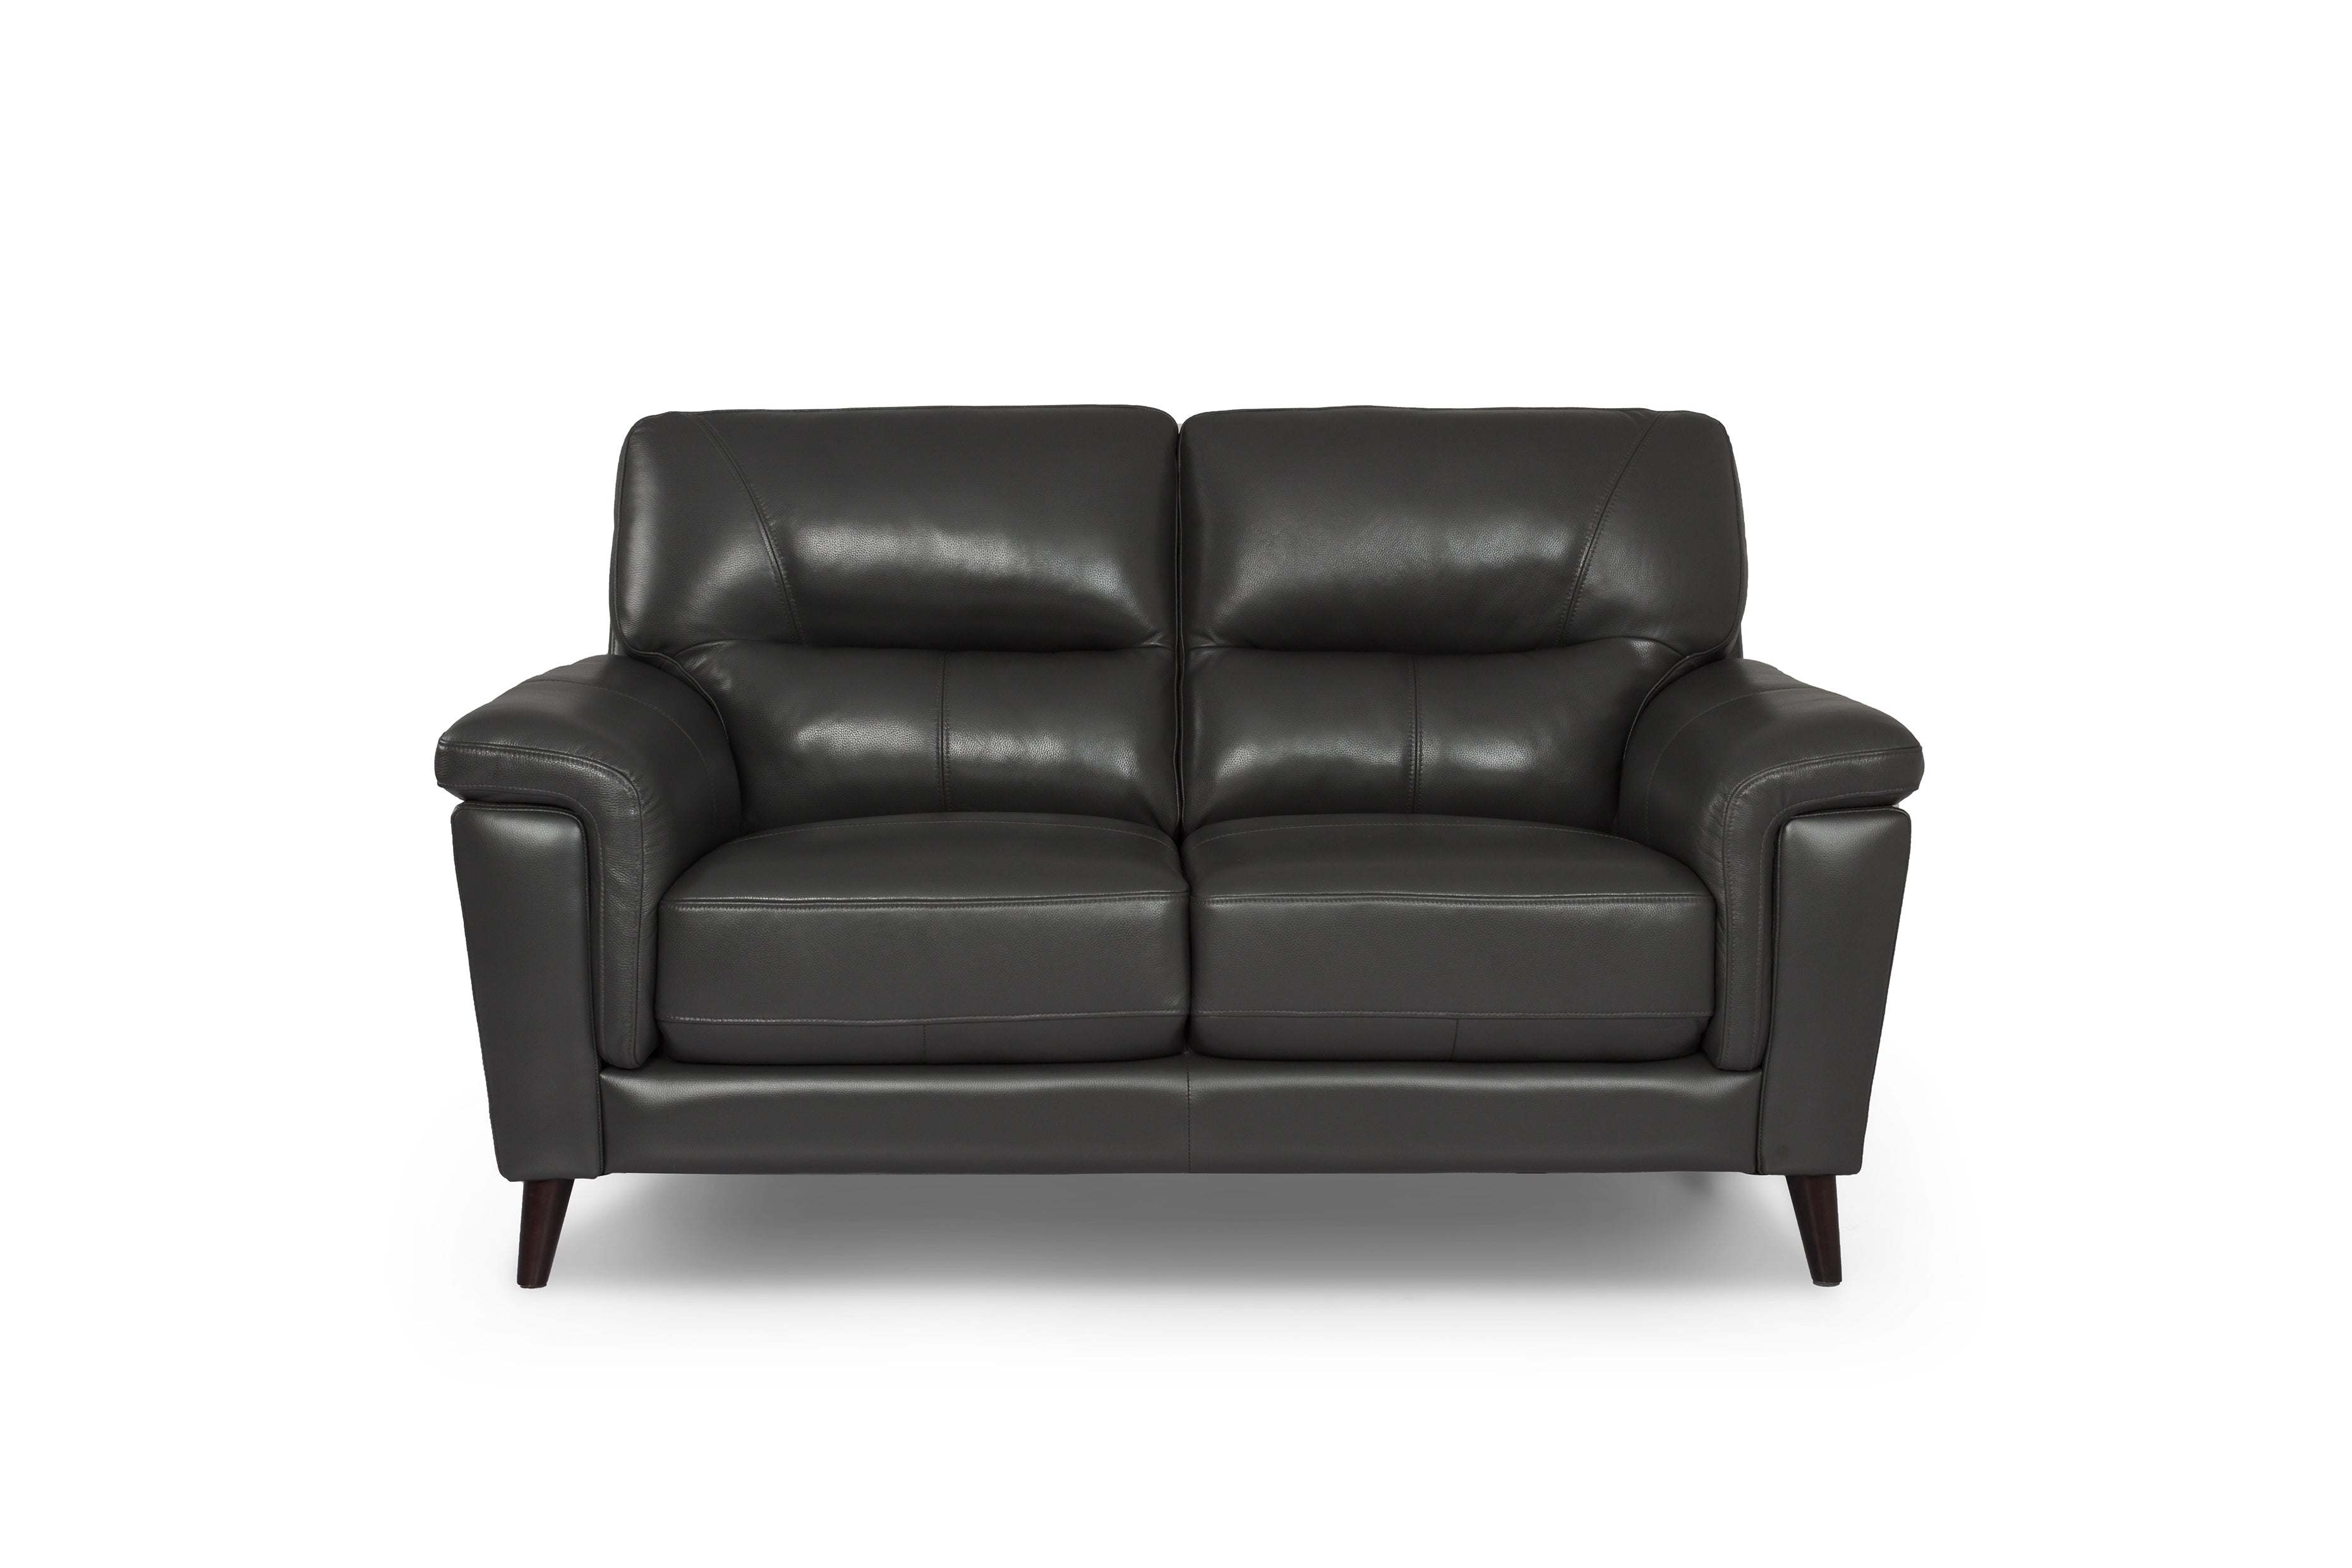 Lyon 2 Seater Leather Sofa